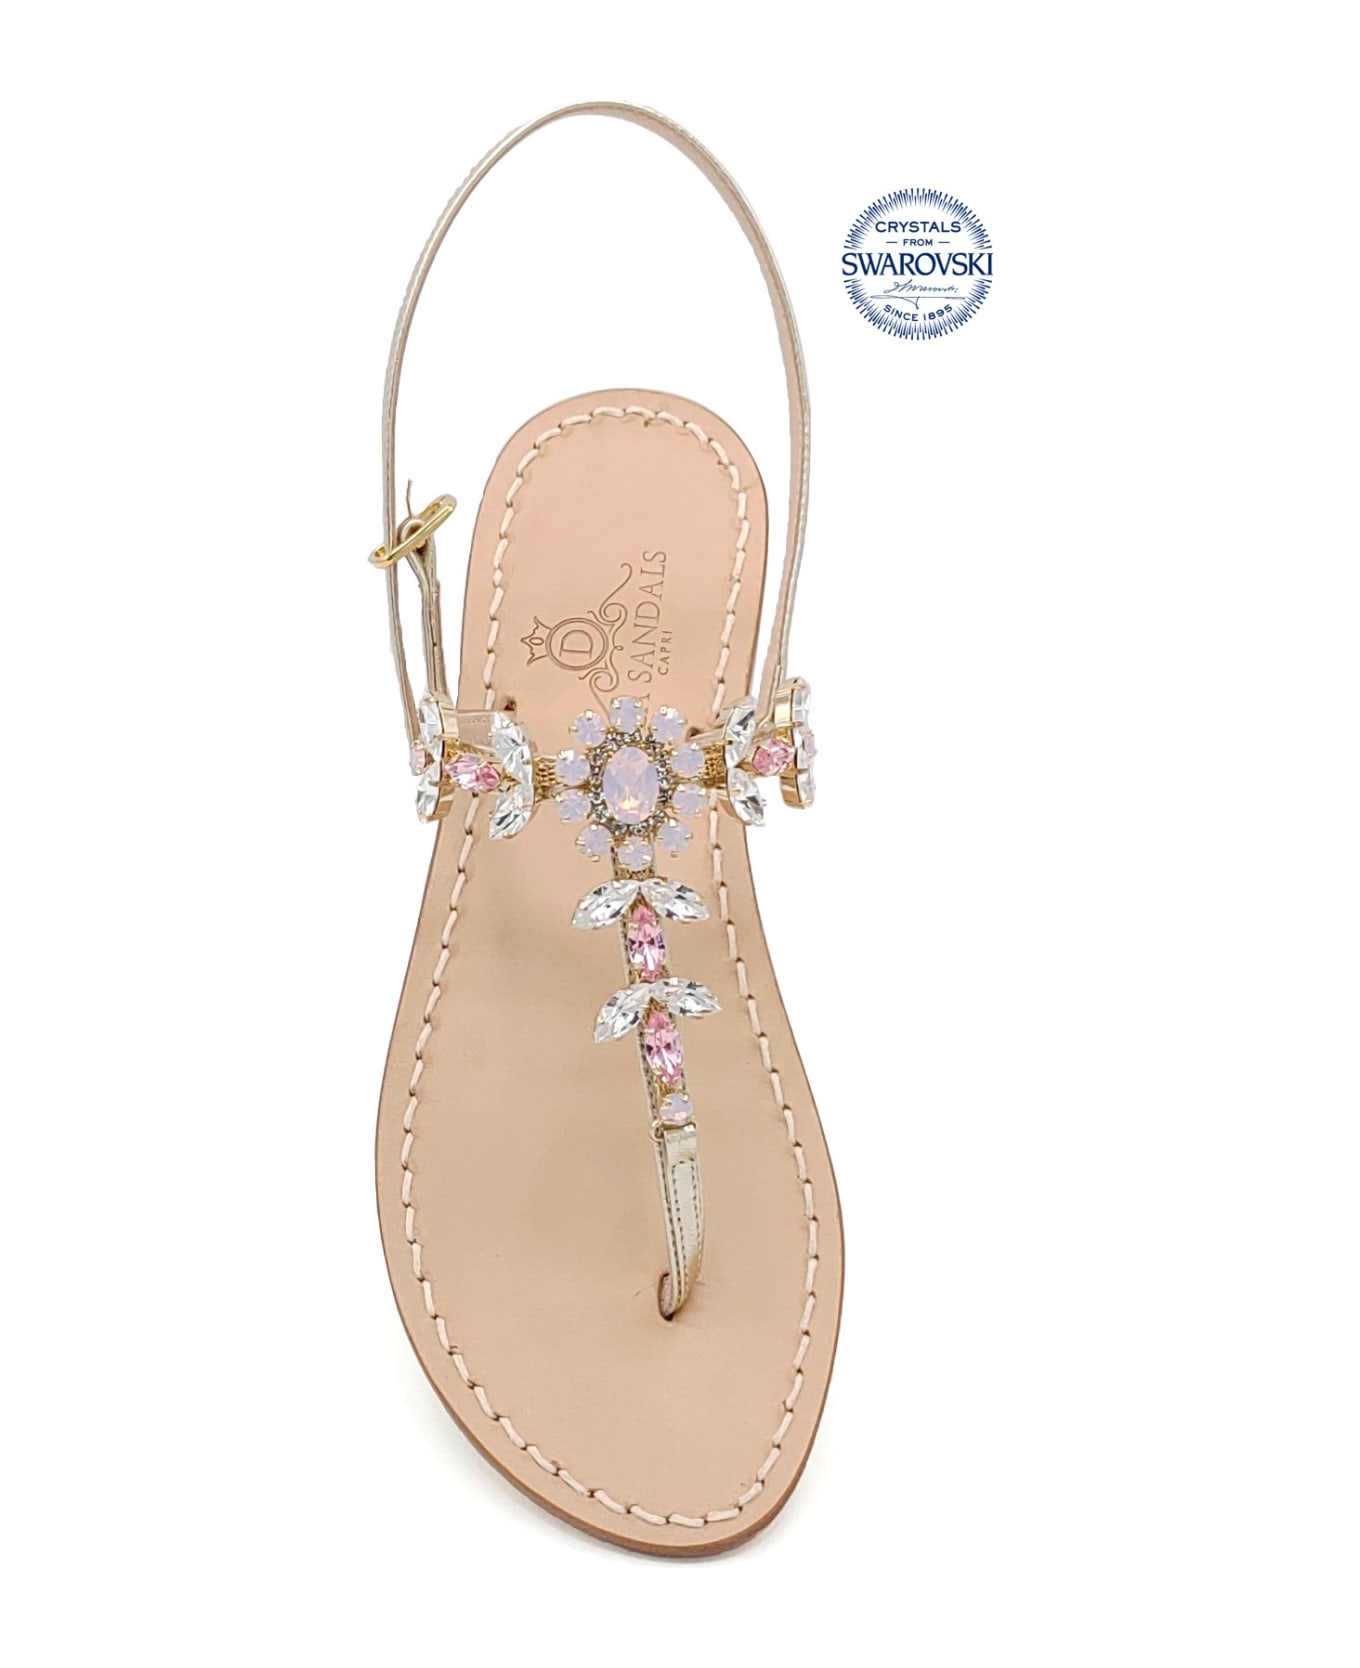 Dea Sandals Marina Grande Flip Flops Thong Sandals - gold, crystal, pink